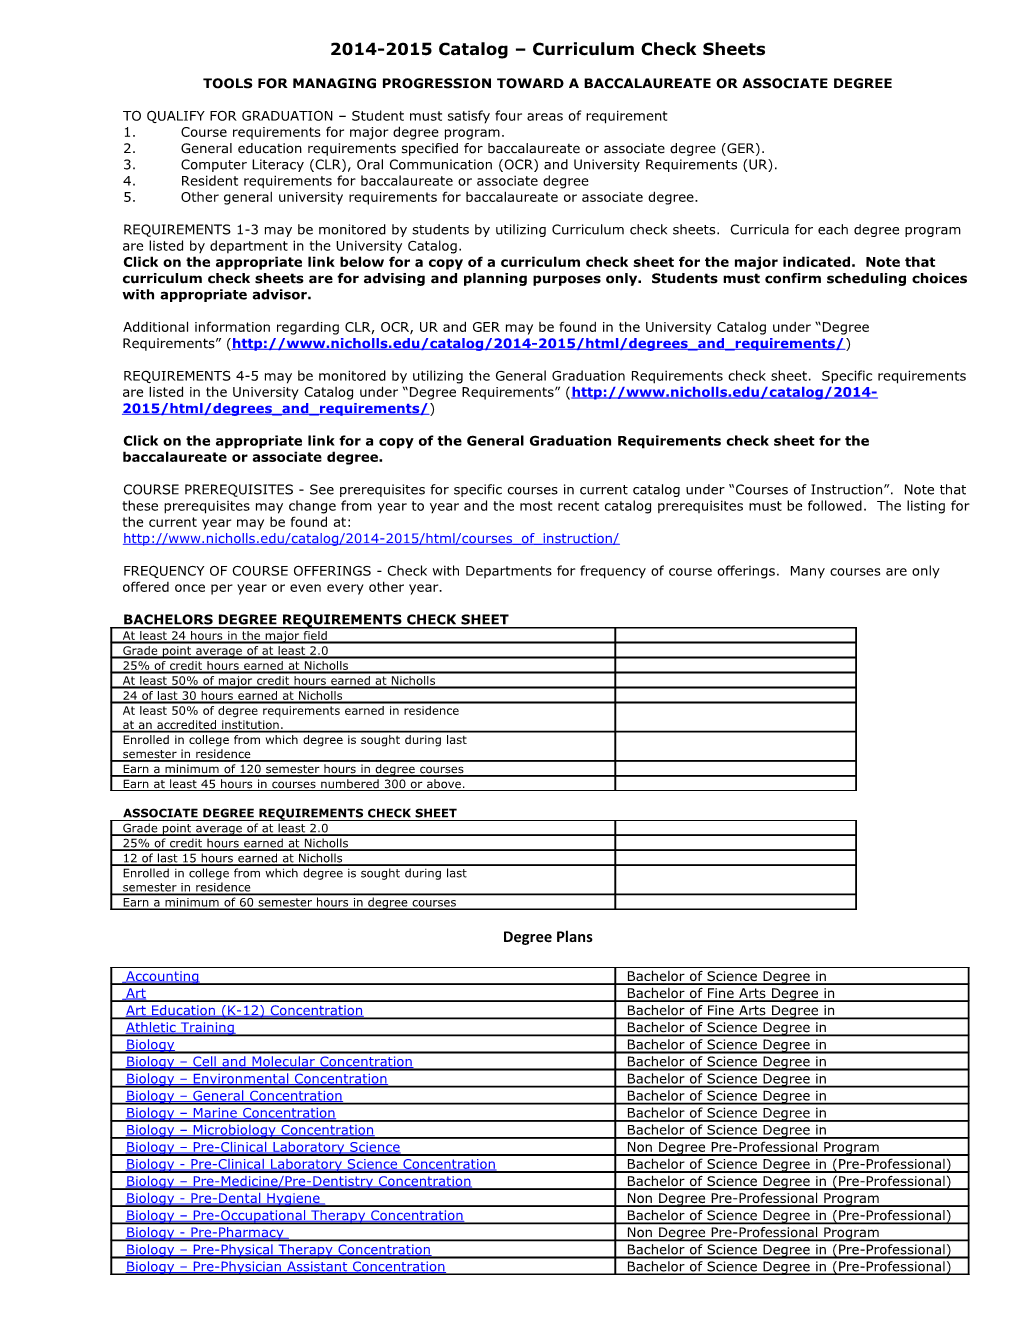 2014-2015 Catalog Curriculum Check Sheets